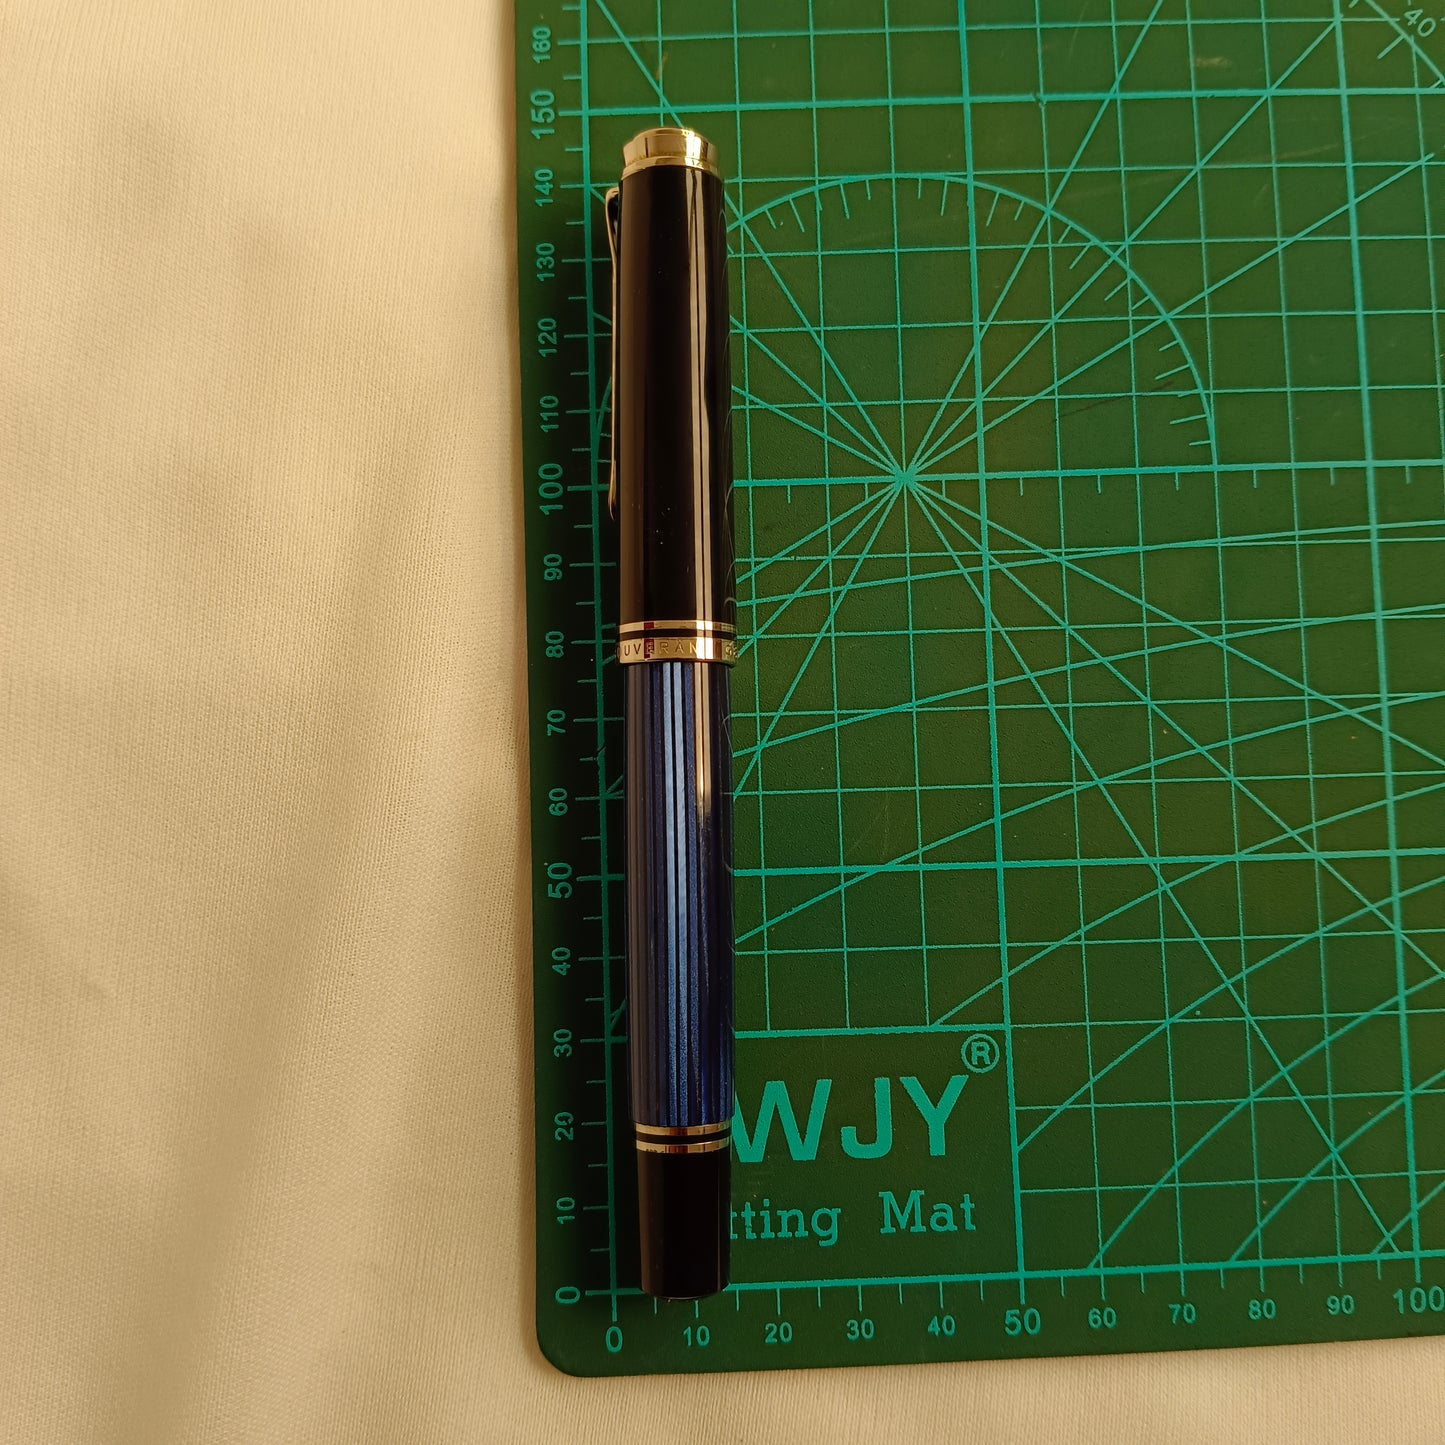 Pelikan Souveran M805 Black/Blue Fountain Pen